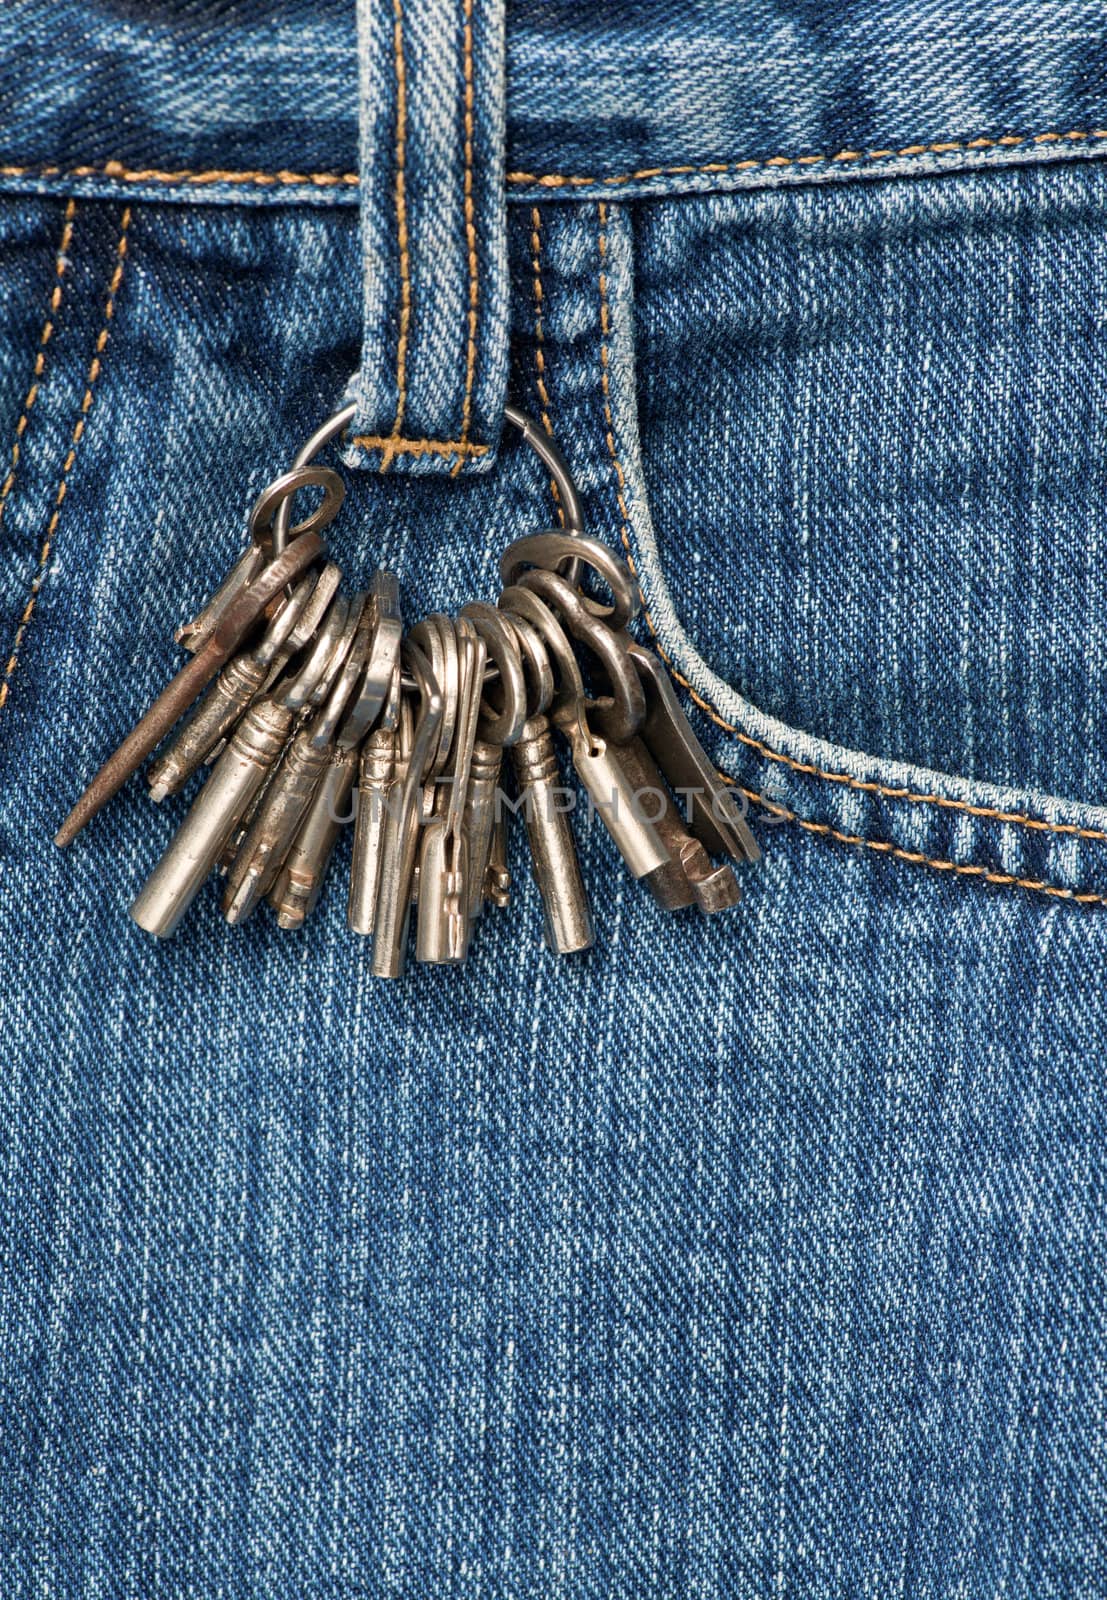 Bunch of keys on a blue jeans